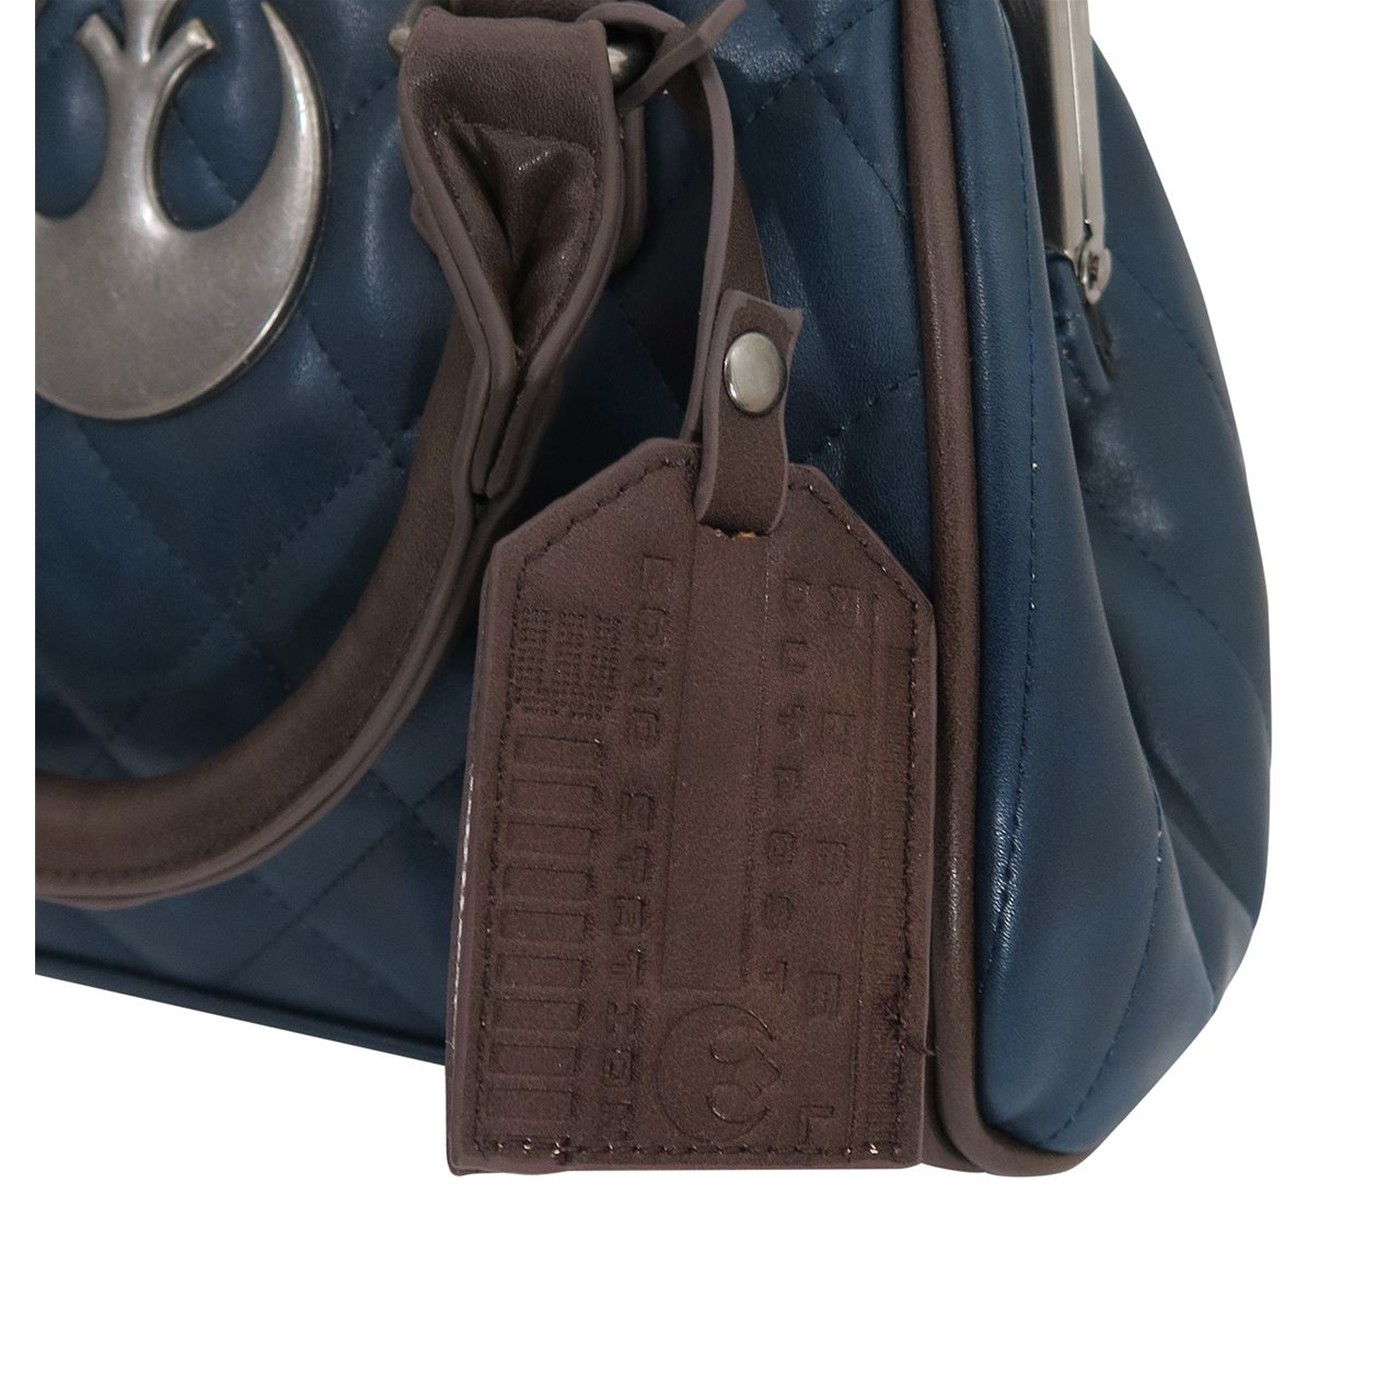 Star Wars Han Solo Hoth Suit Kiss Lock Handbag